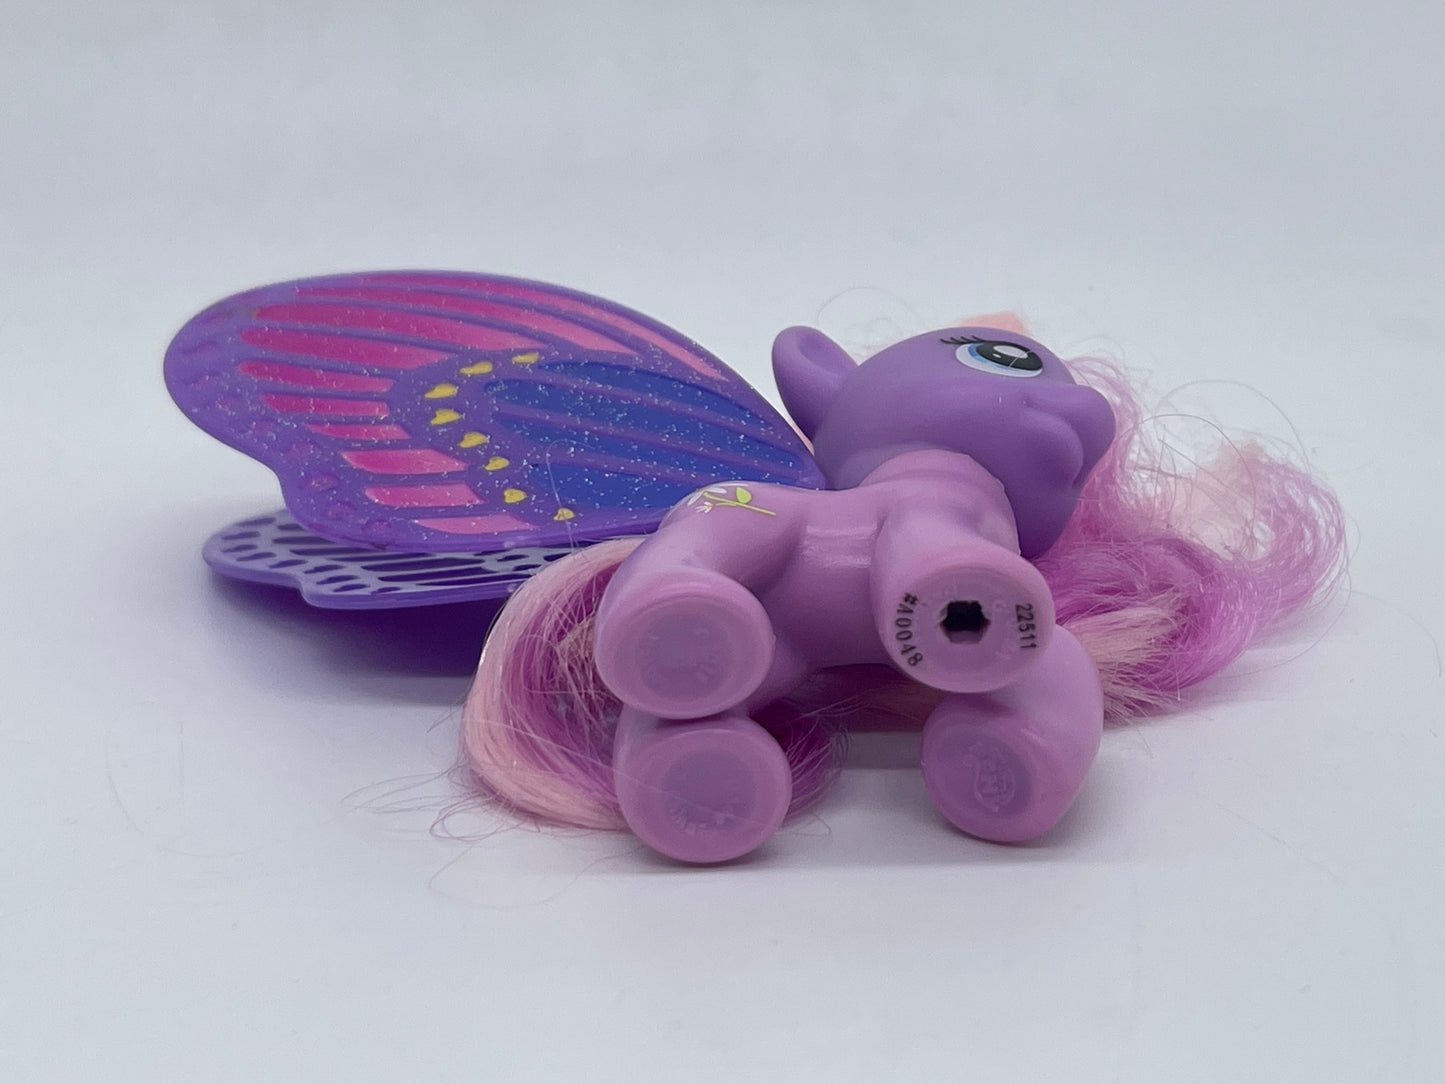 My Little Pony "Daisy Dreams" Glimmer Wings Friendship is Magic (Hasbro, 2011)